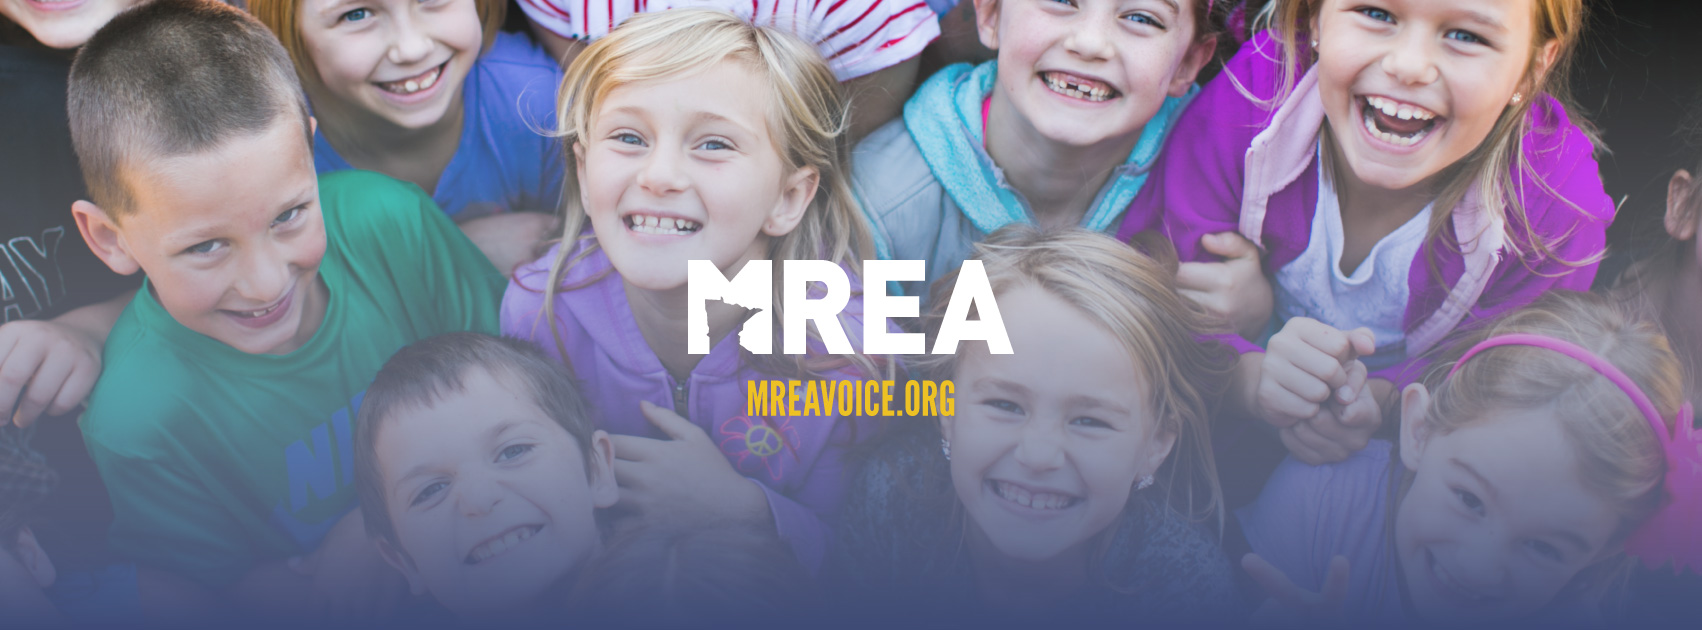 Share MREA News with School Leaders